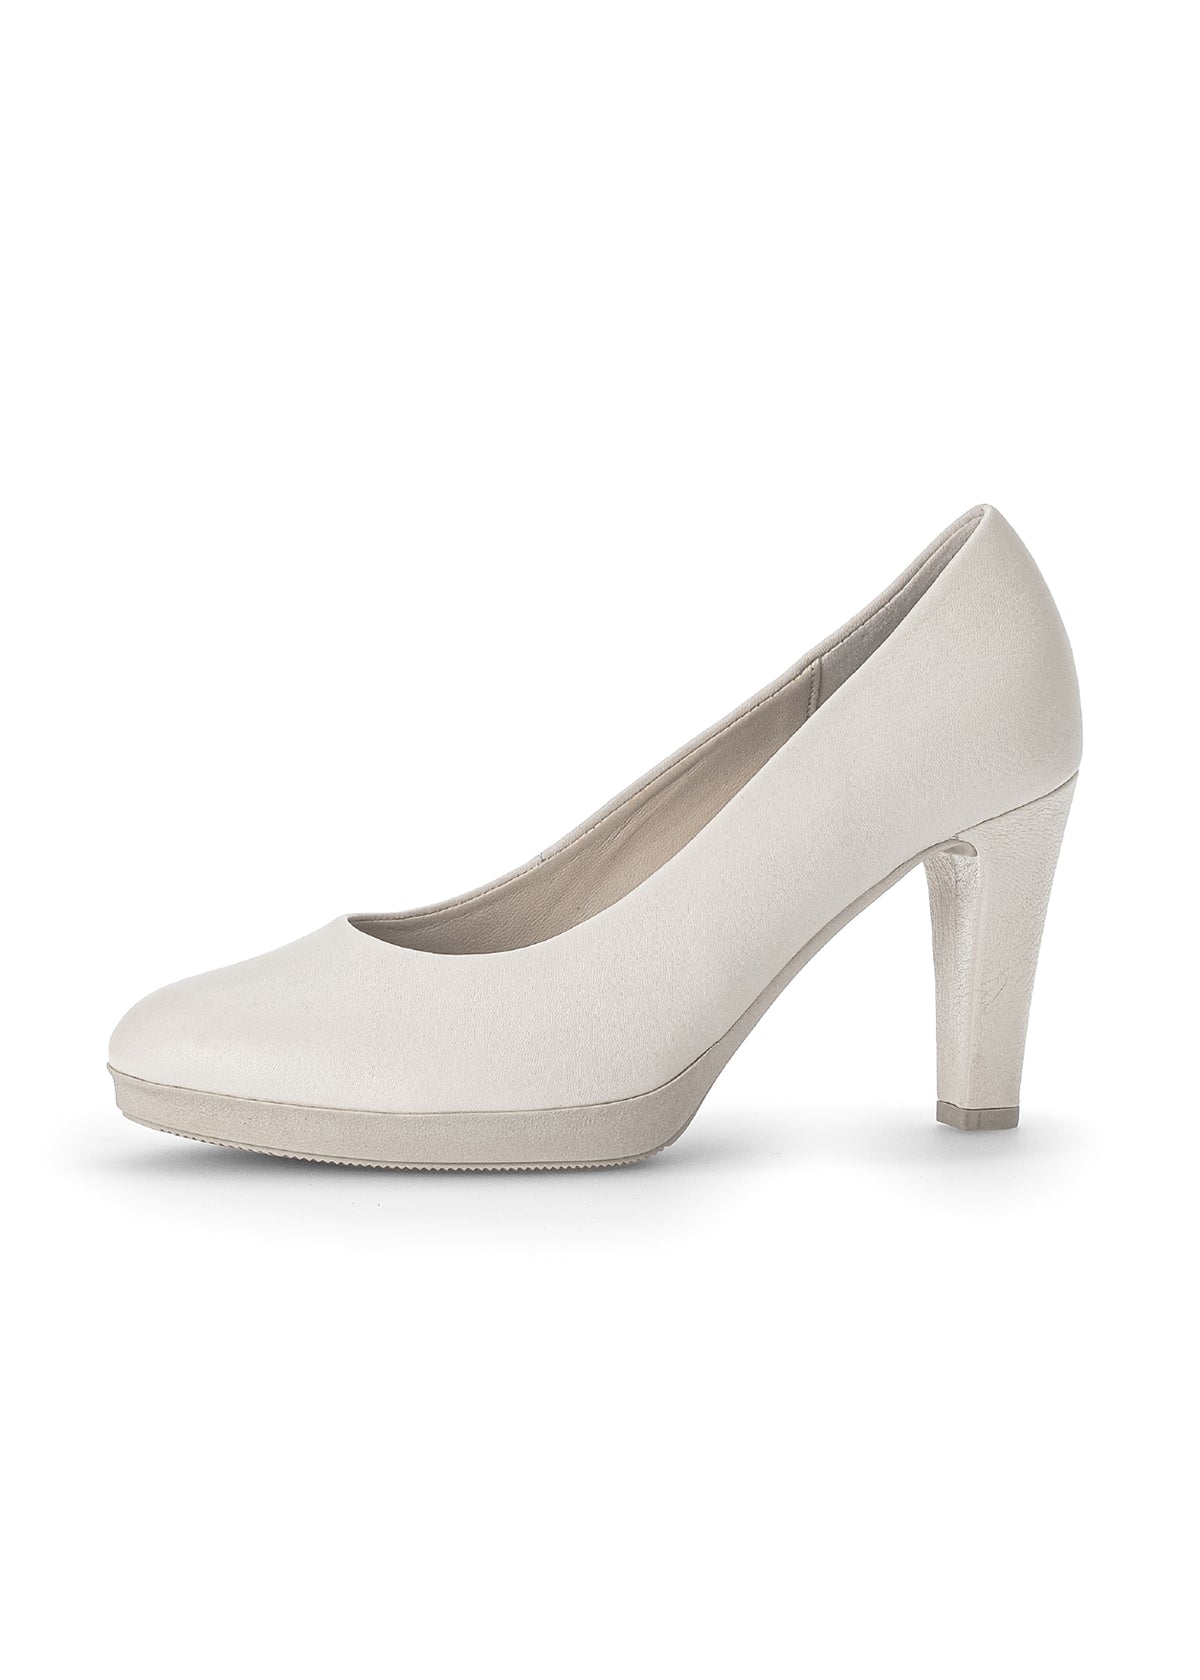 High heels - off-white